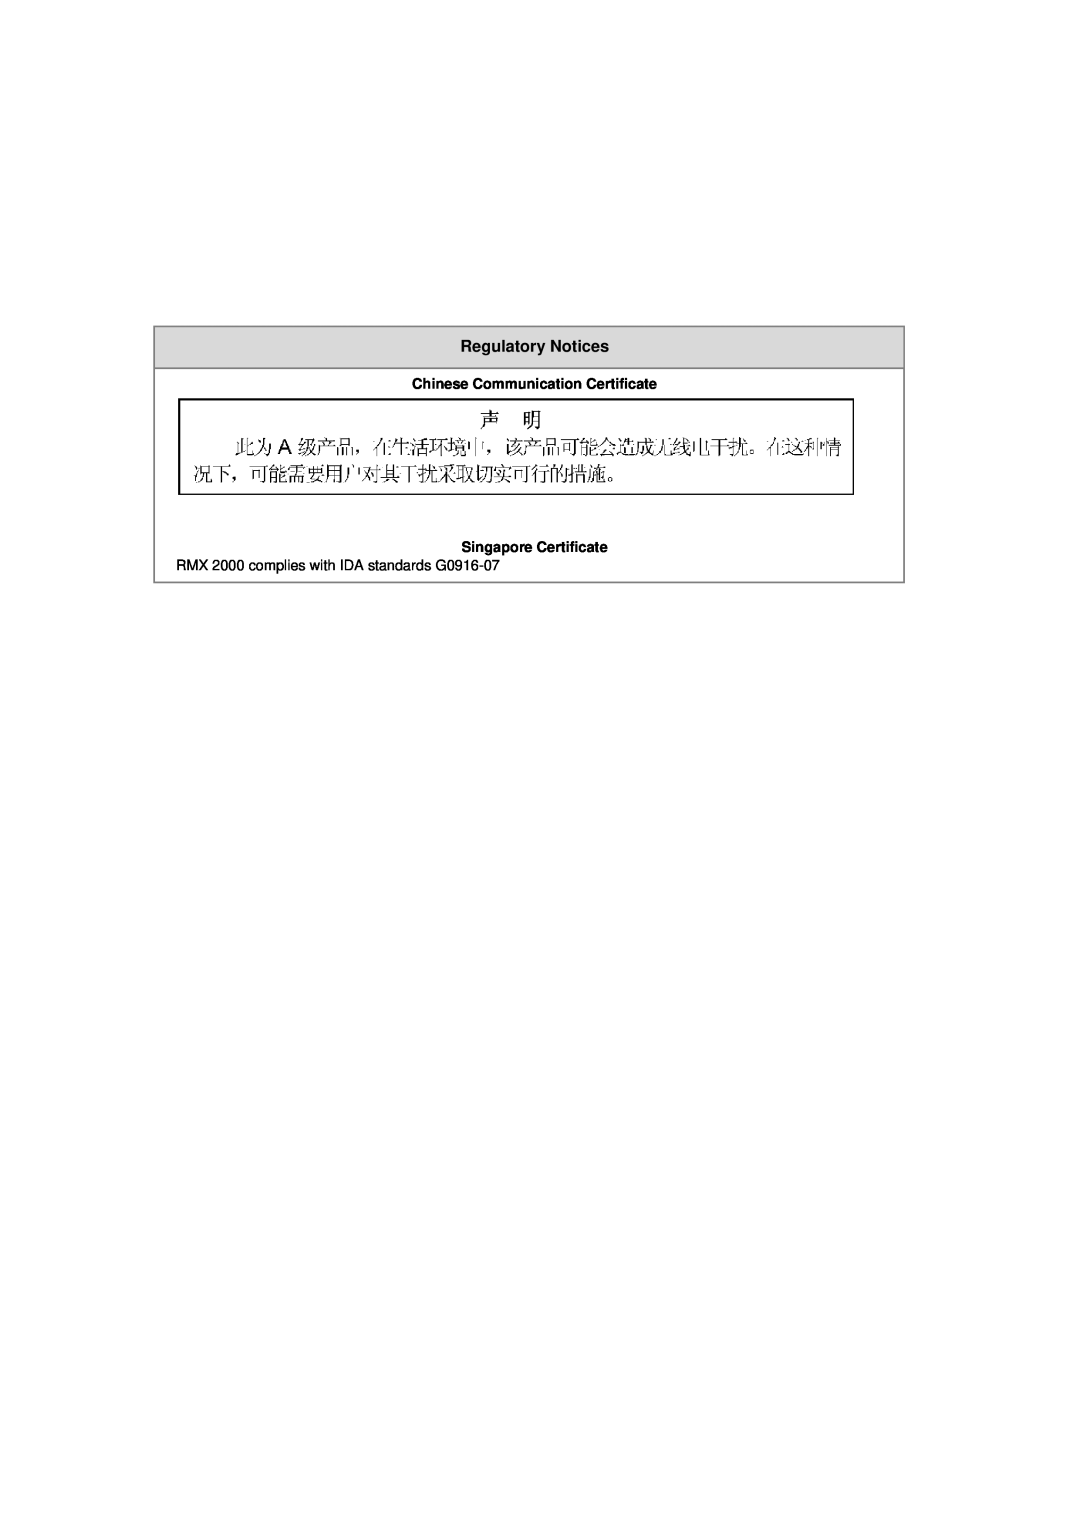 Polycom RMX 2000 manual Regulatory Notices, Chinese Communication Certificate Singapore Certificate 